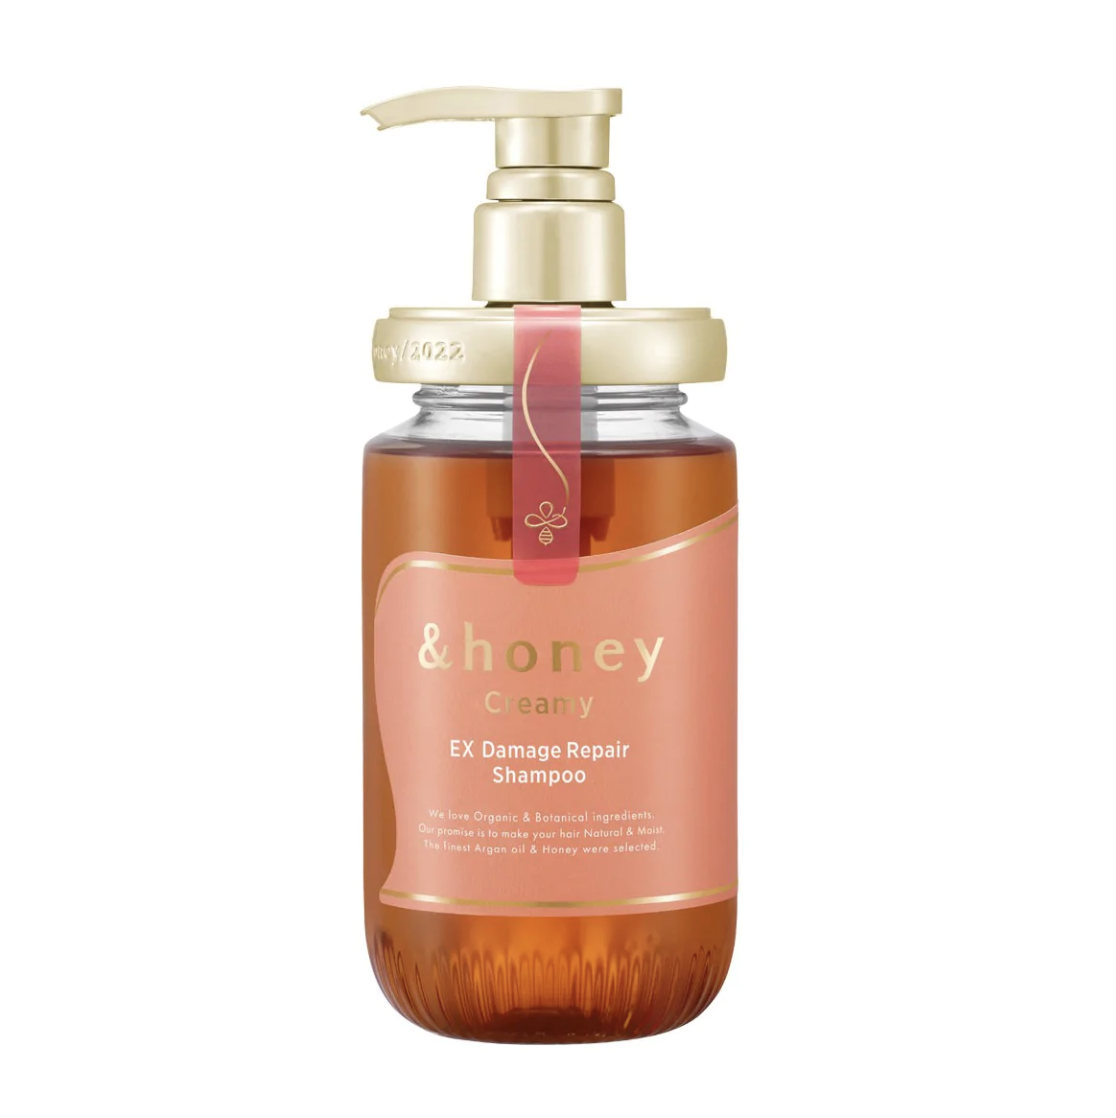  & Honey (and Honey) Deep Moist Shampoo 1.0 440ml : Beauty &  Personal Care